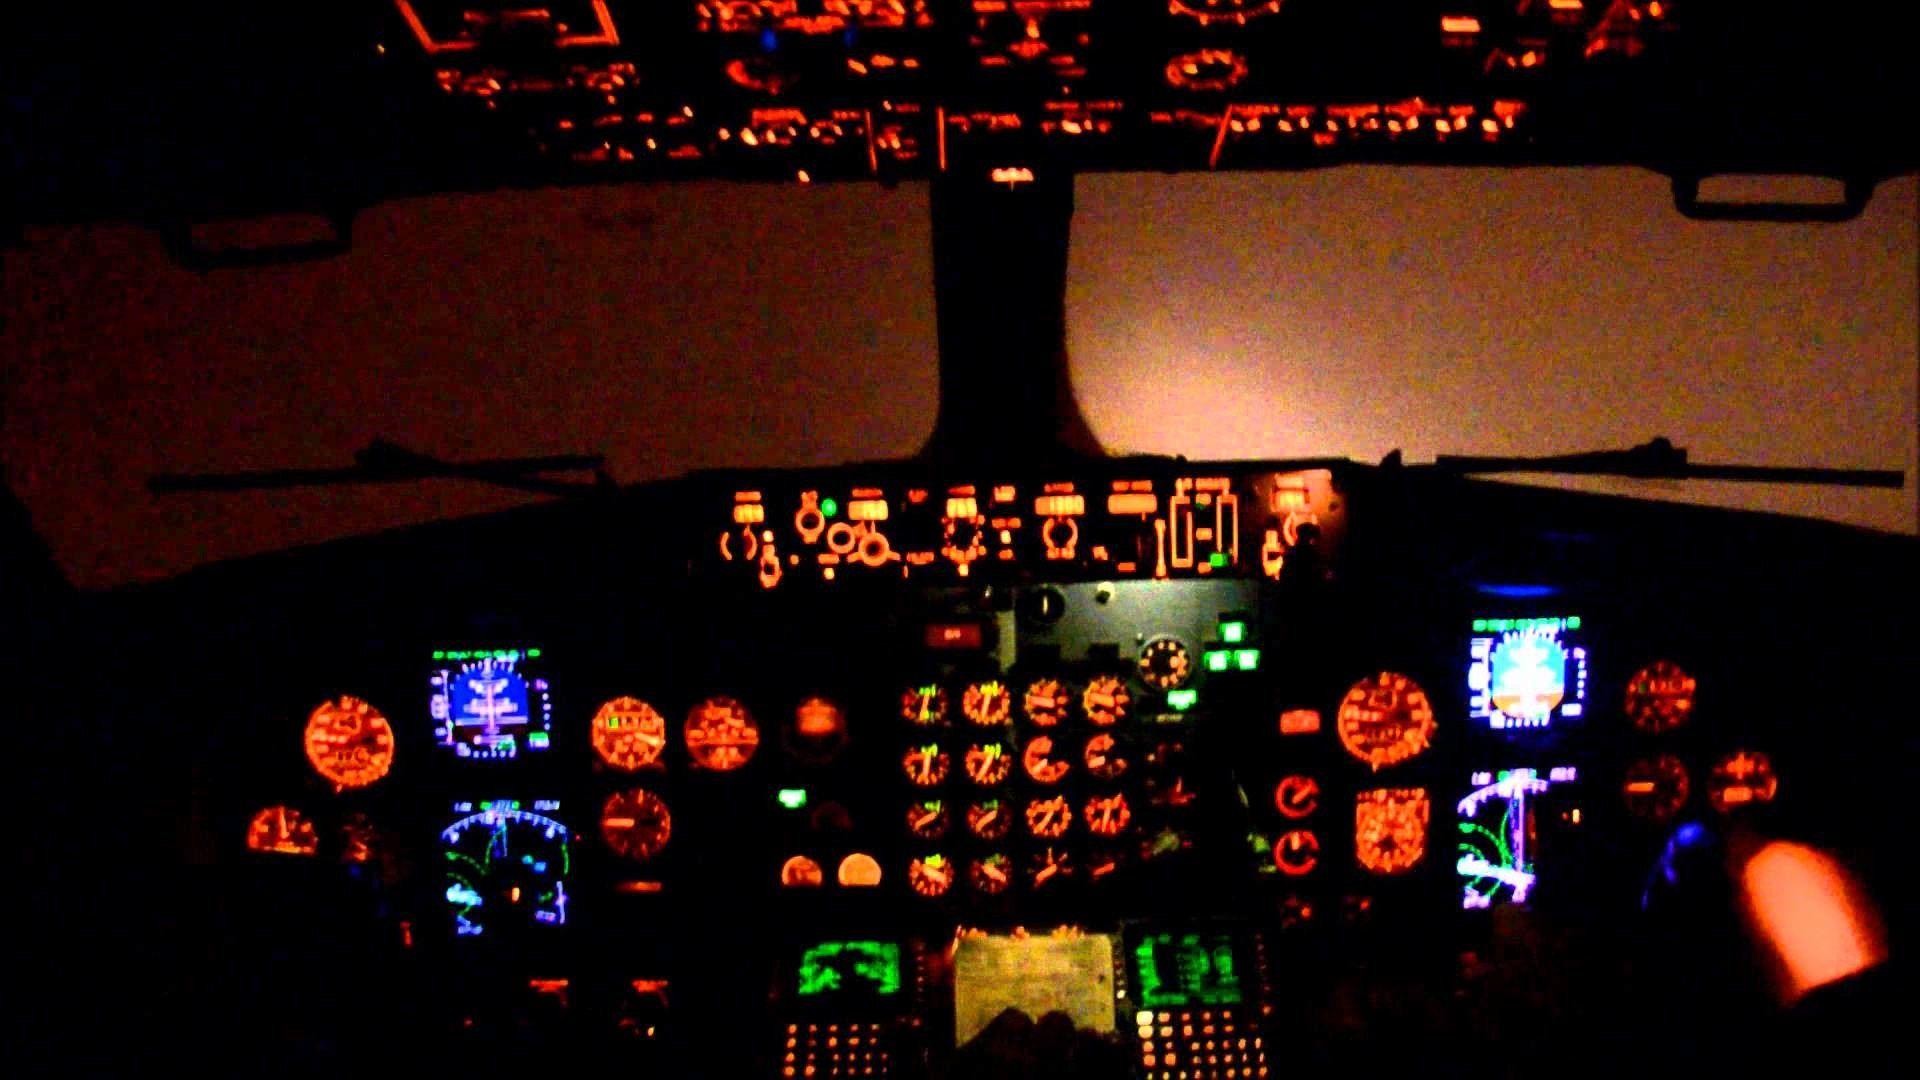 Boeing 737 Cockpit Wallpaper